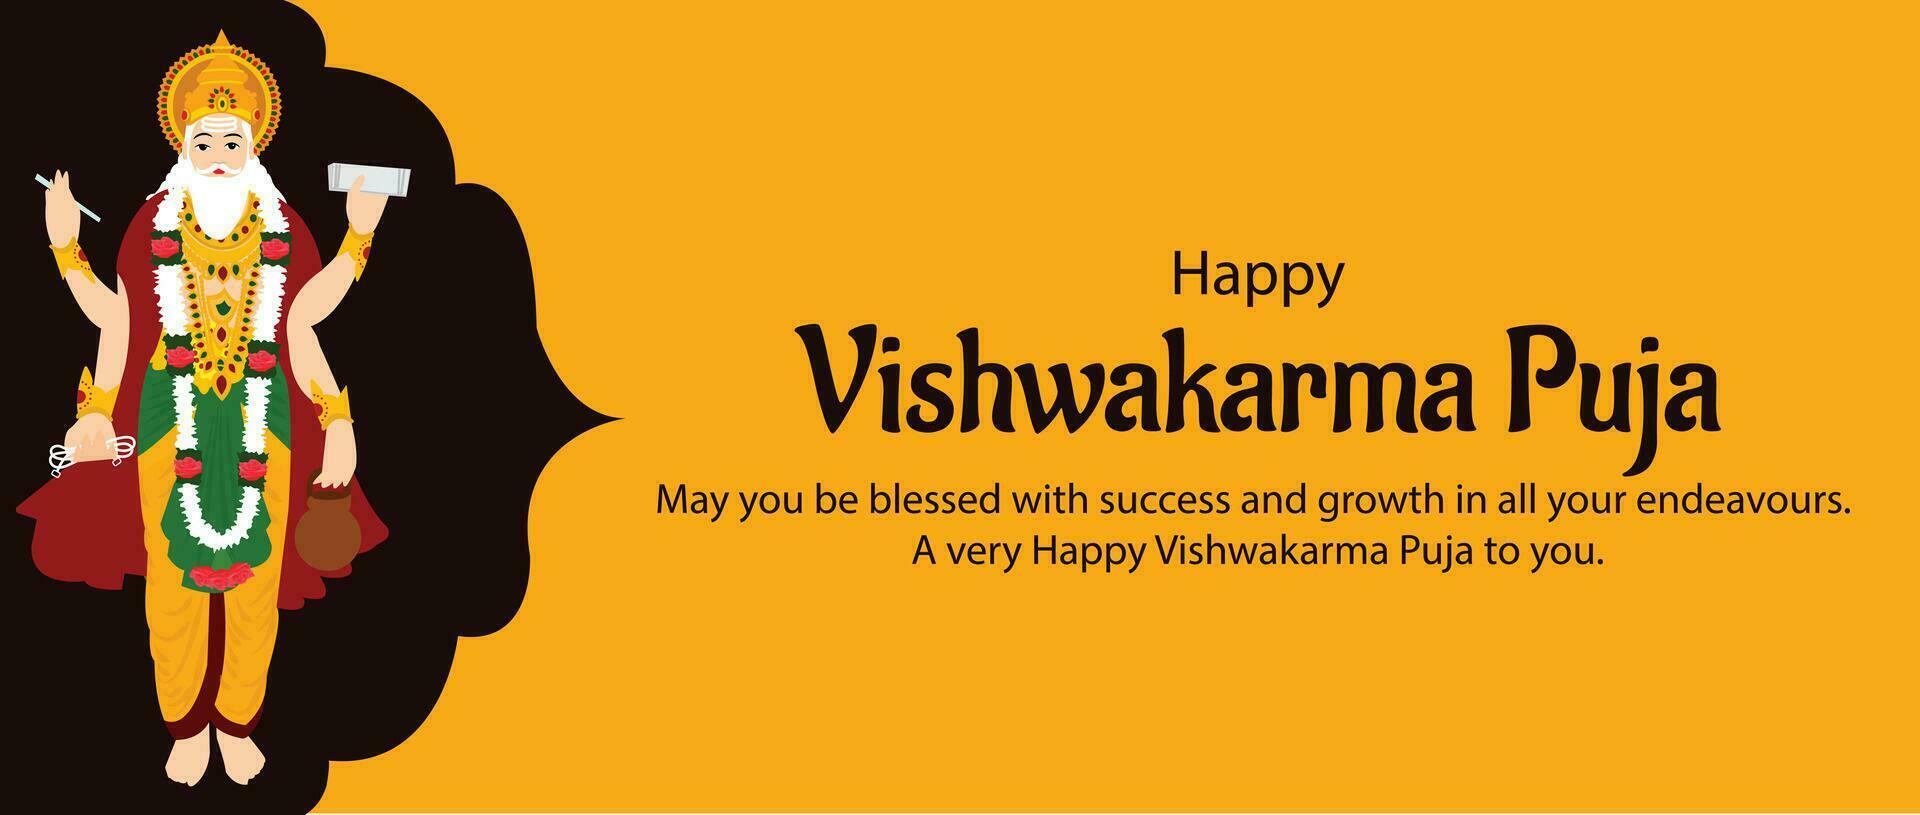 Lycklig vishwakarma puja indisk hindu festival vektor firande